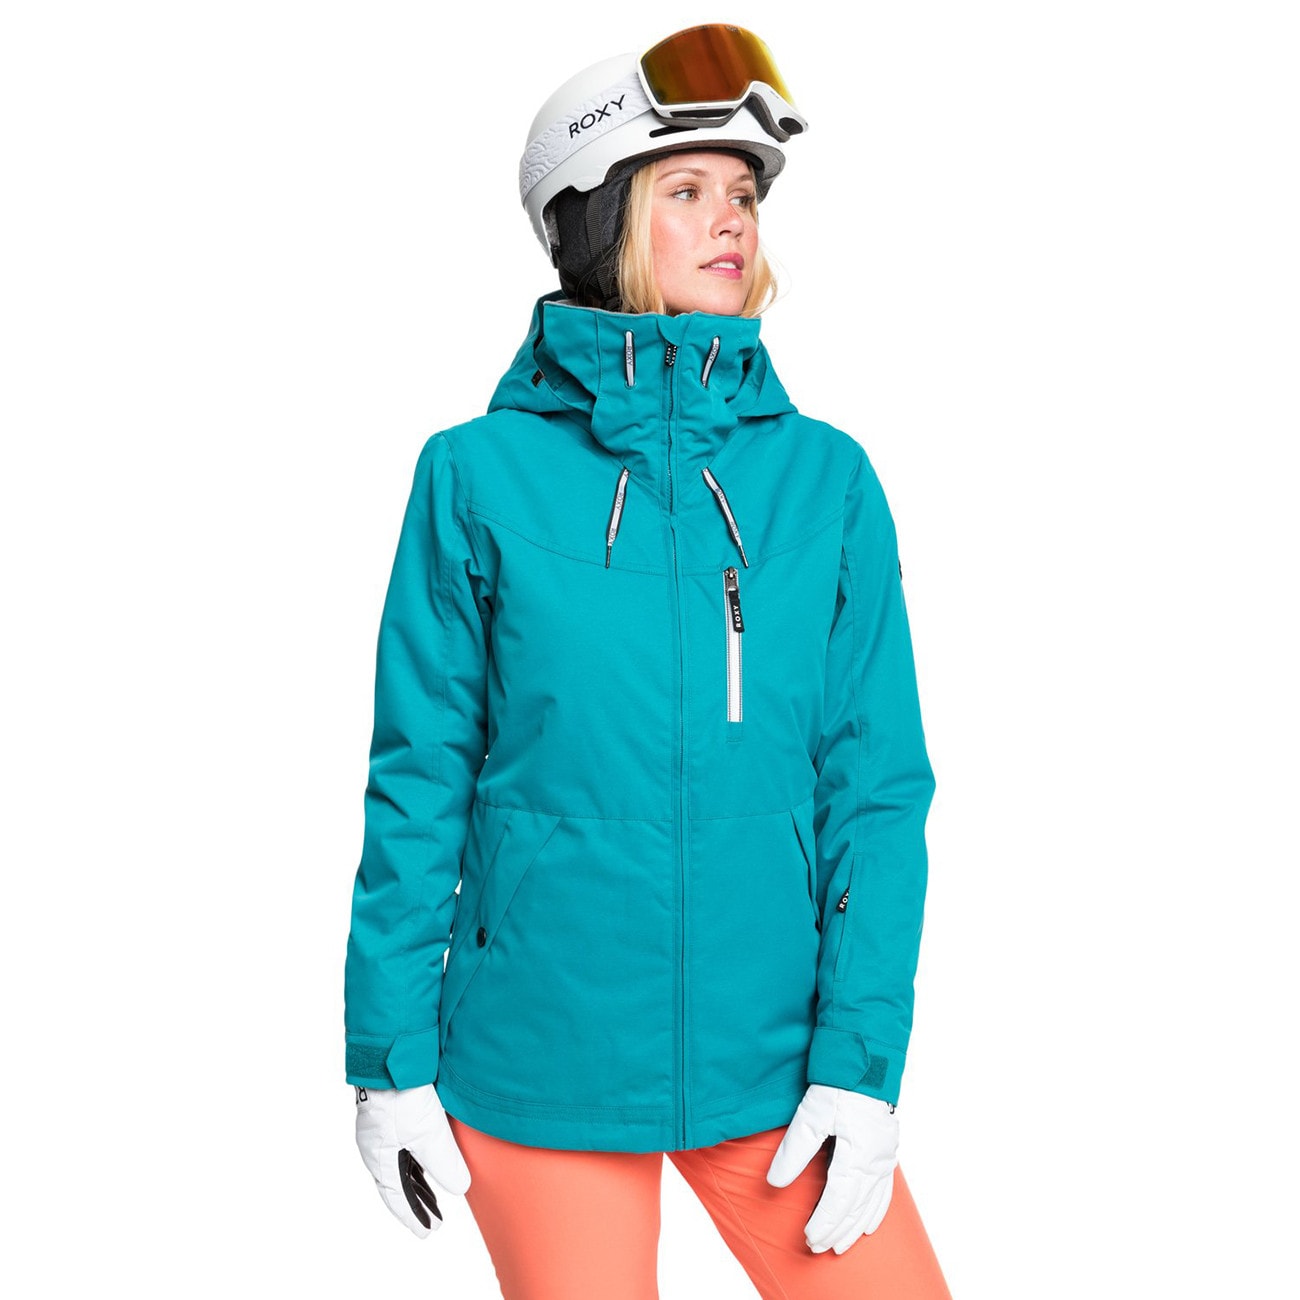 Roxy Presence Parka Jacket - Ski jacket Women's, Buy online